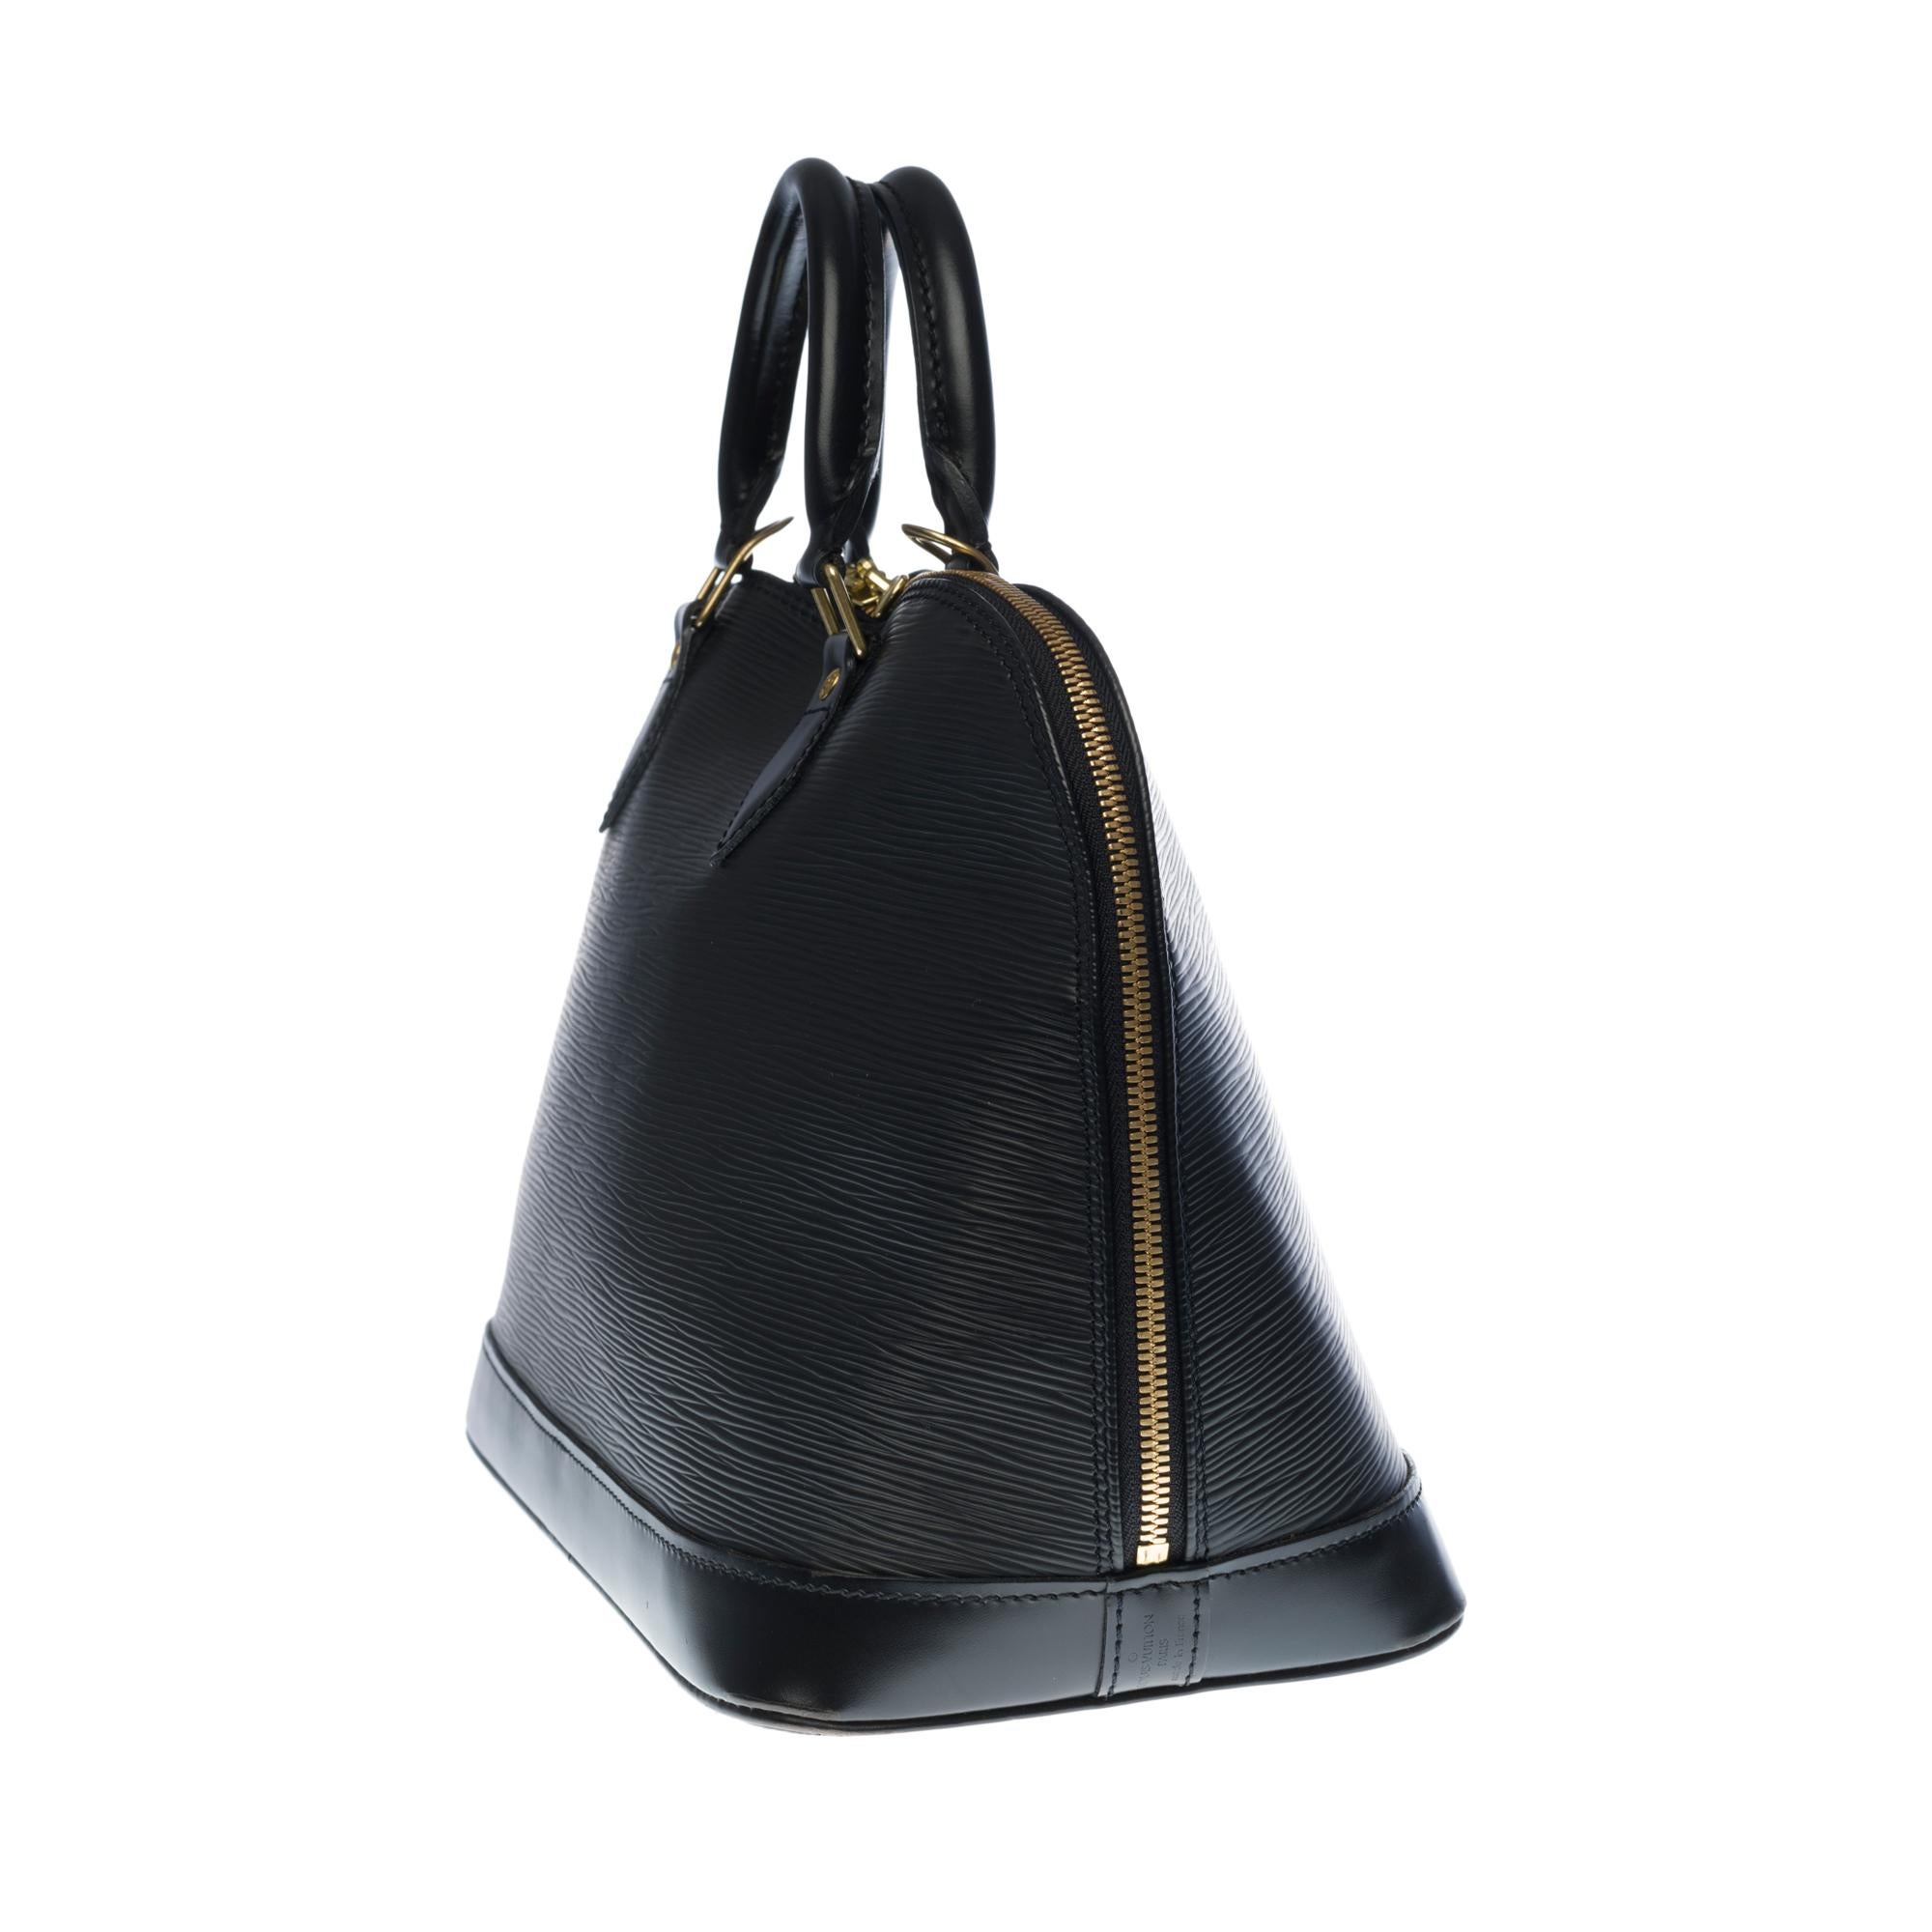 Black Louis Vuitton Alma handbag in black epi leather, GHW